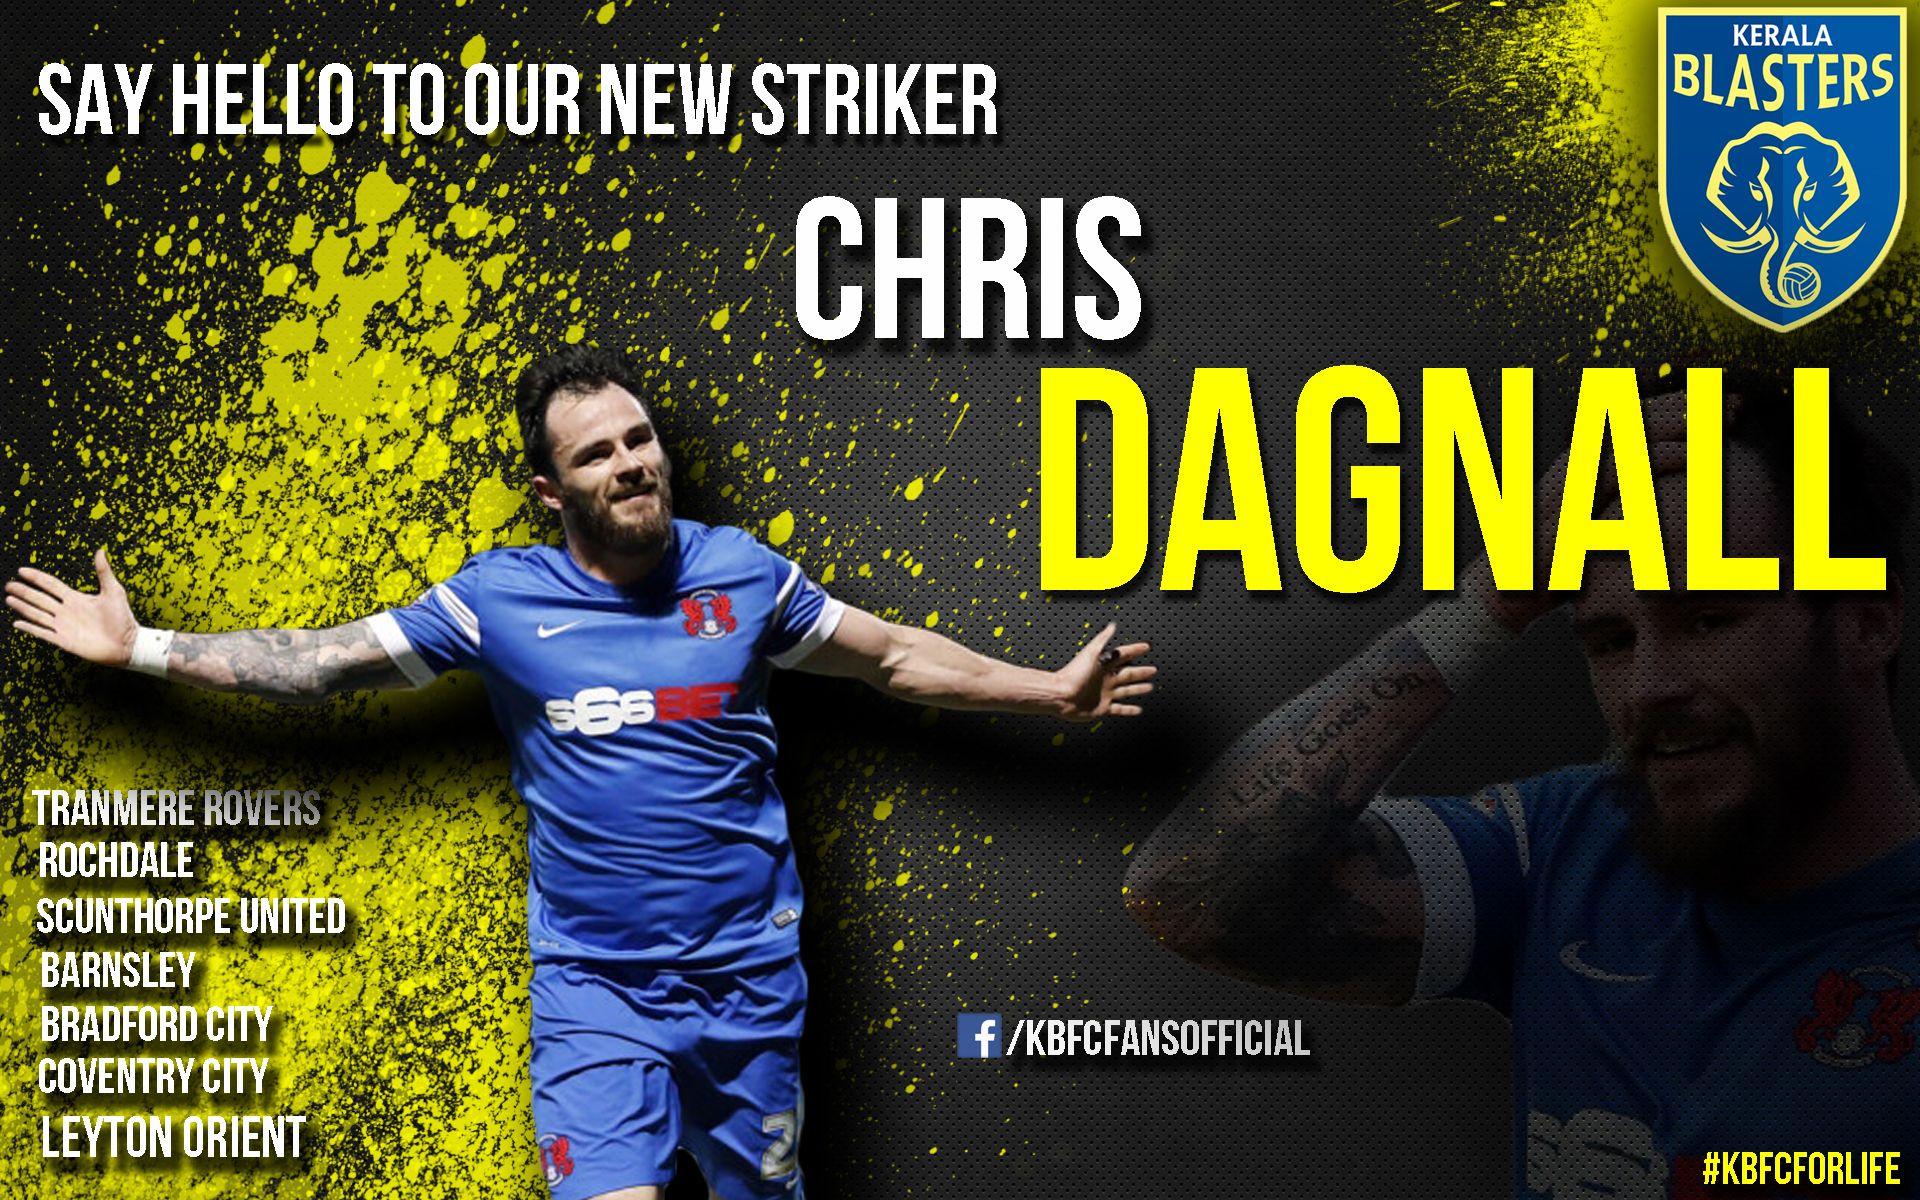 Here is the New Striker of +Kerala Blasters ! ChrisDagnall